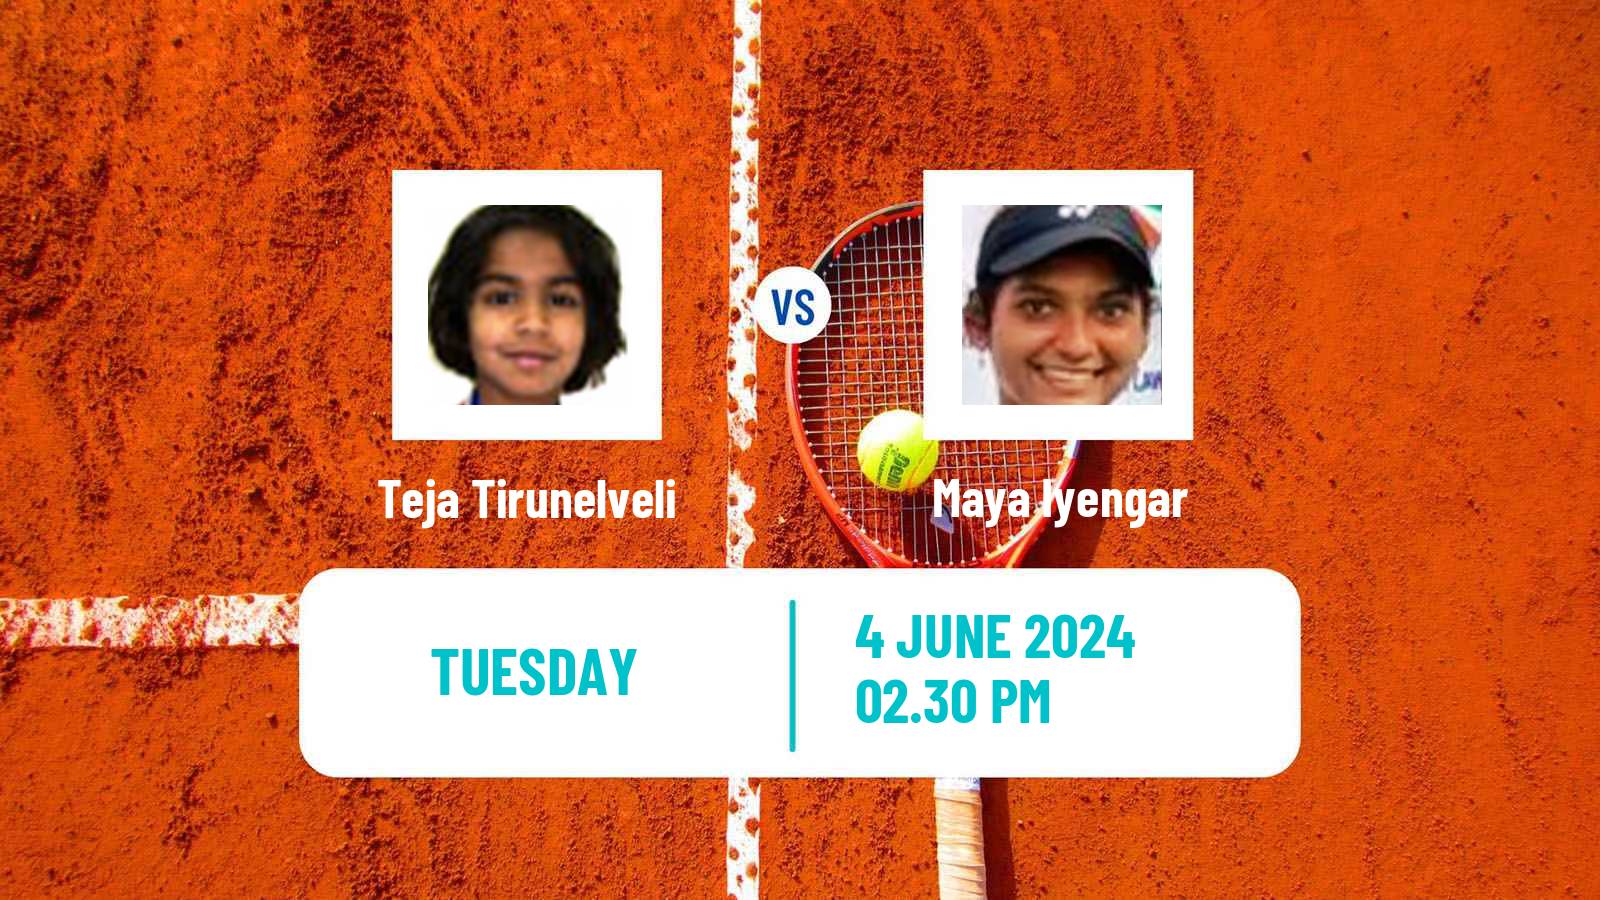 Tennis ITF W15 San Diego Ca 2 Women Teja Tirunelveli - Maya Iyengar